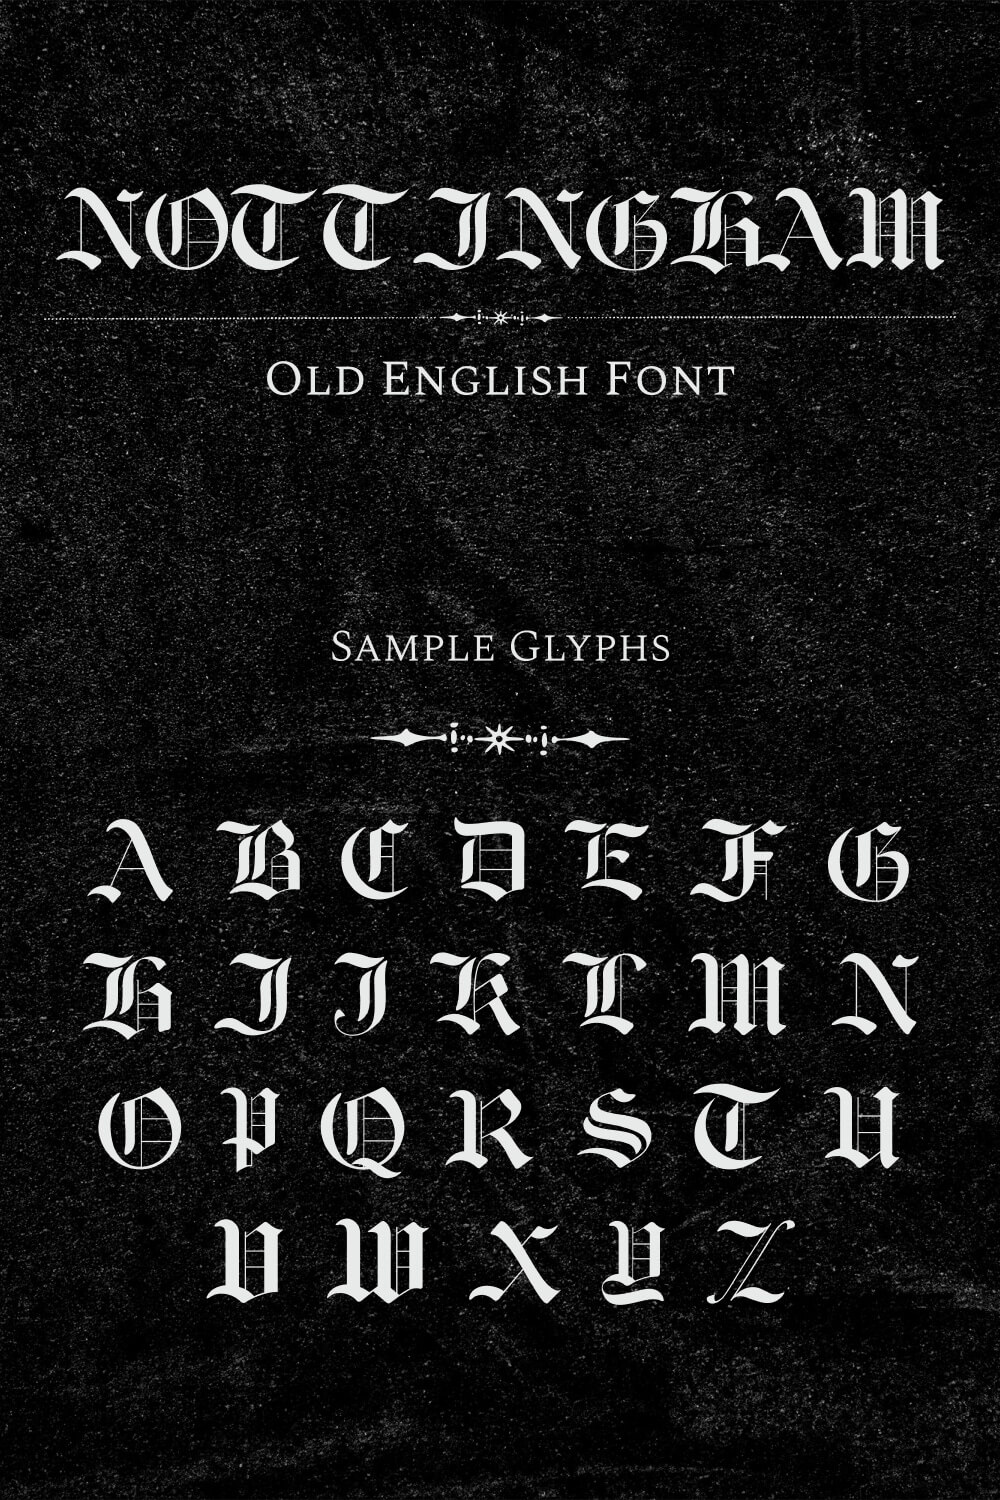 Nottingham Old English Font pinterest.